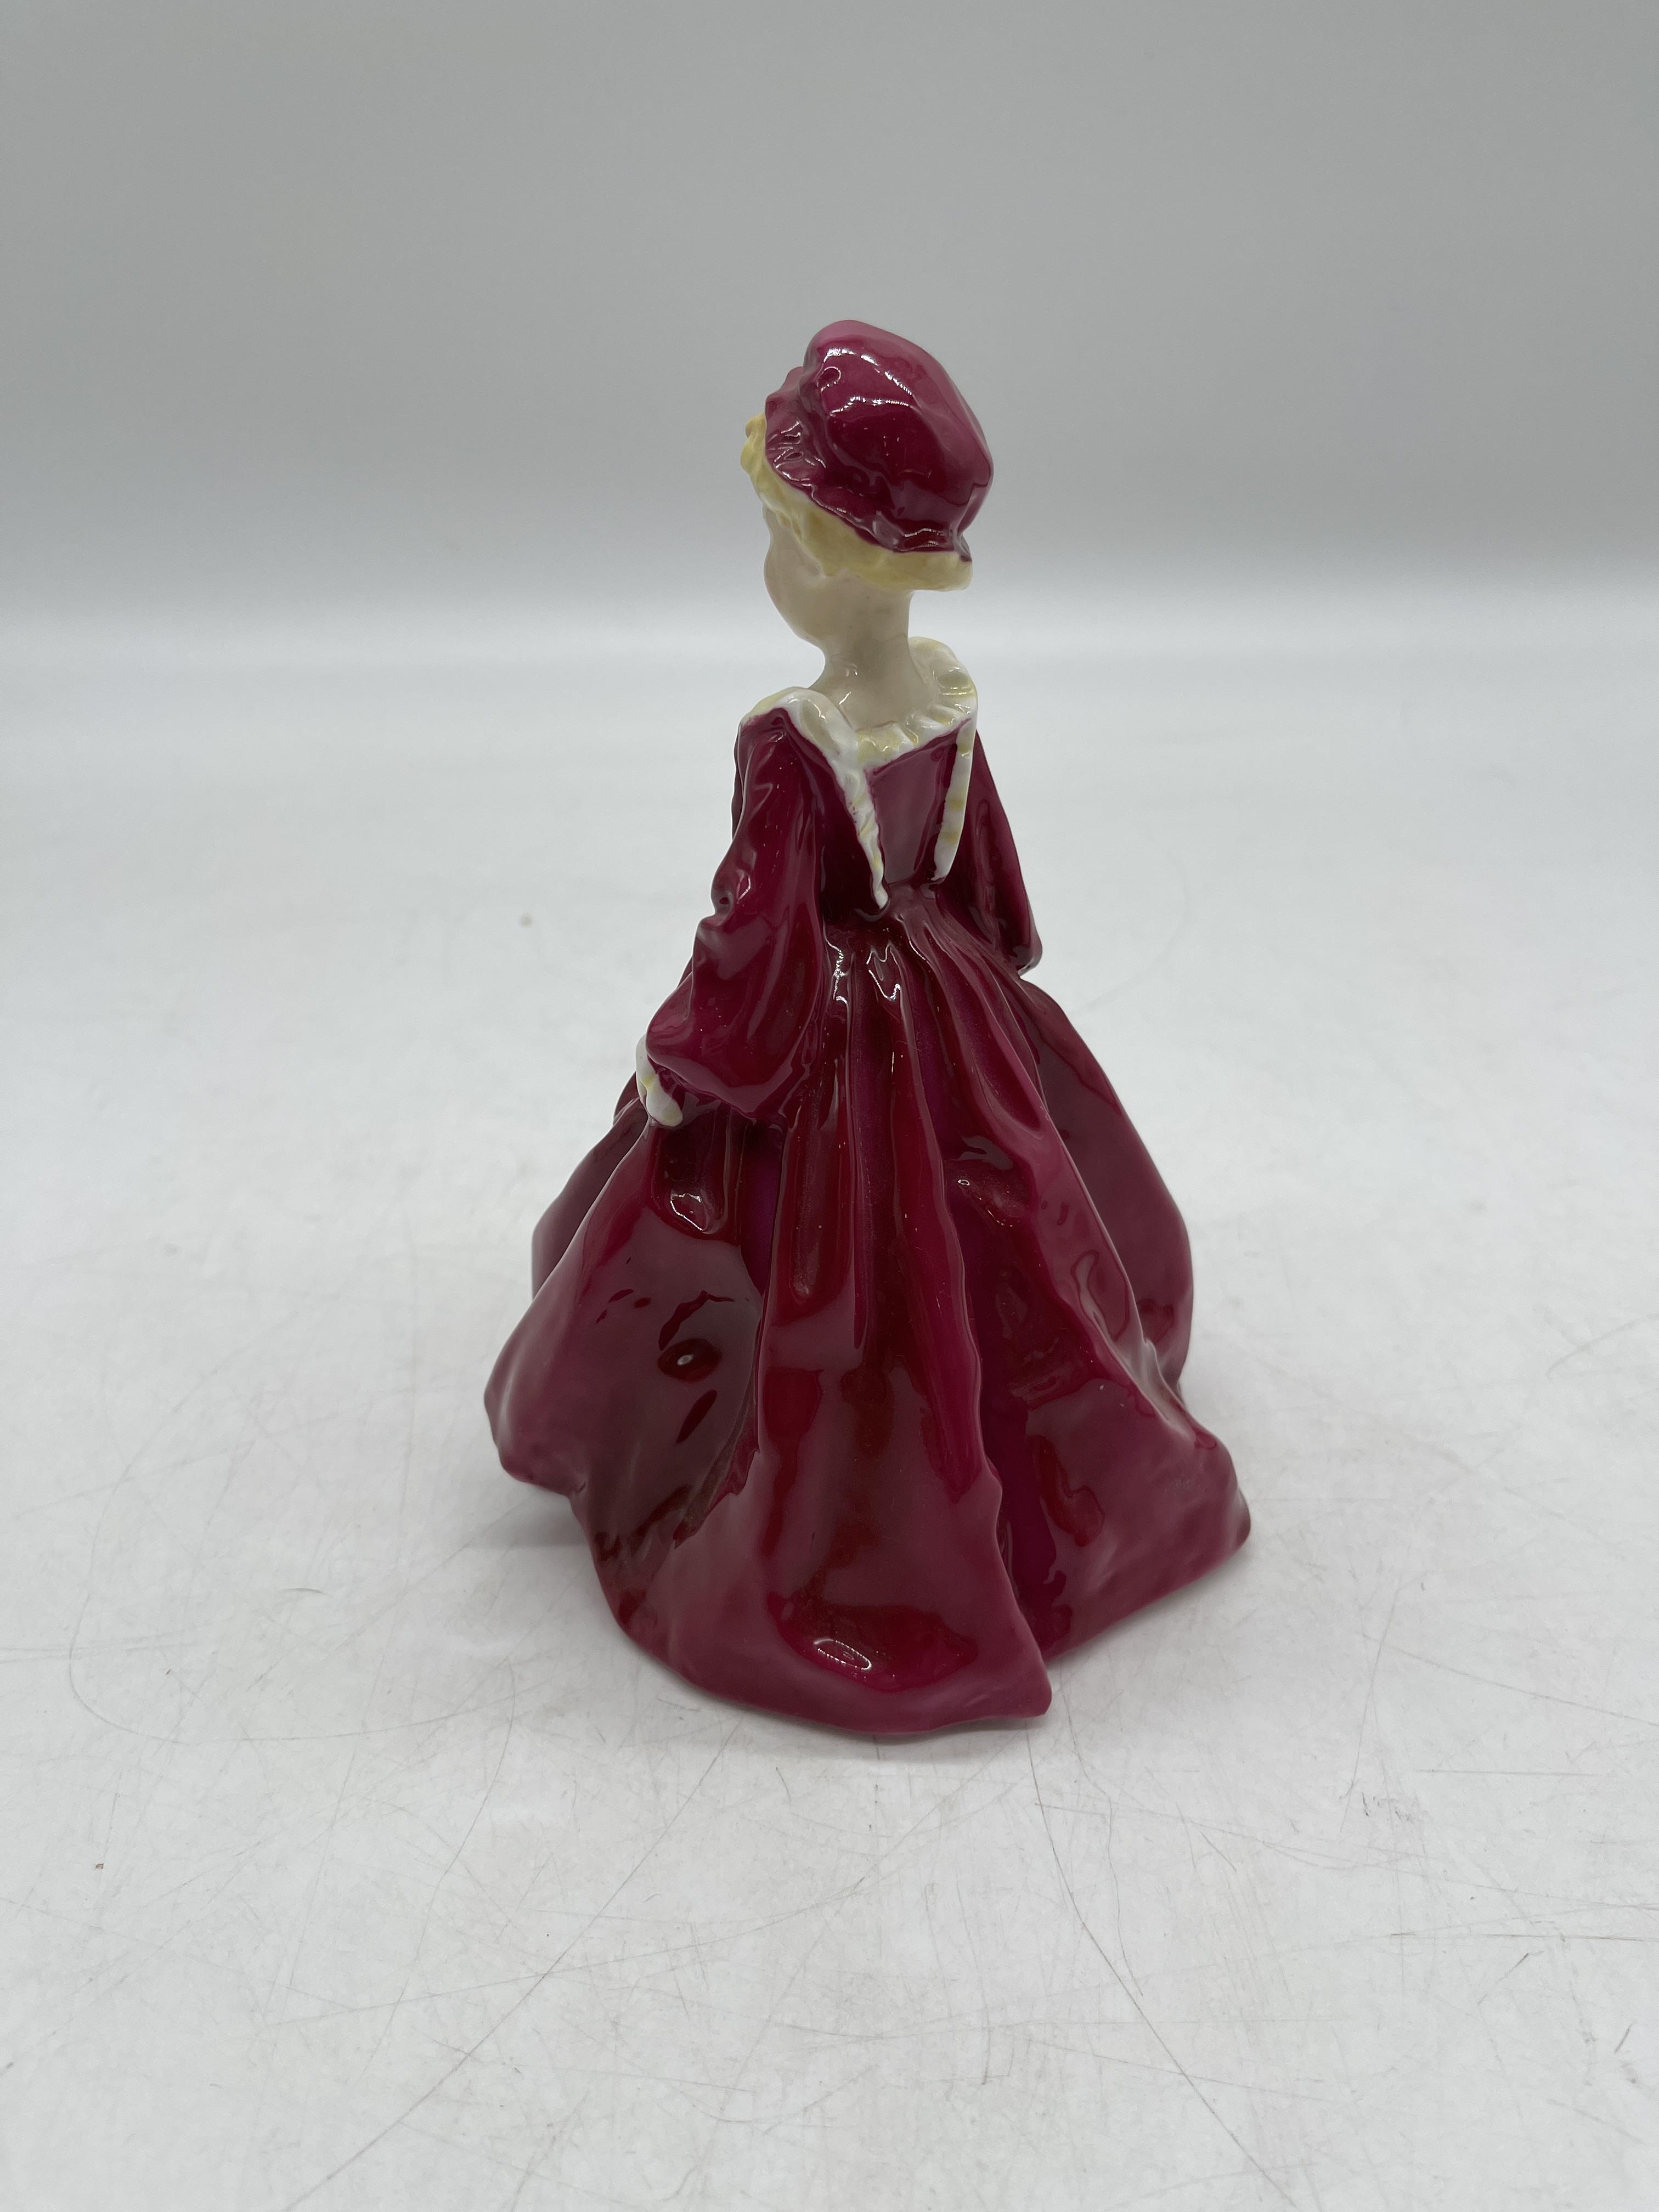 Pink Royal Doulton ceramic figurines - Image 30 of 41